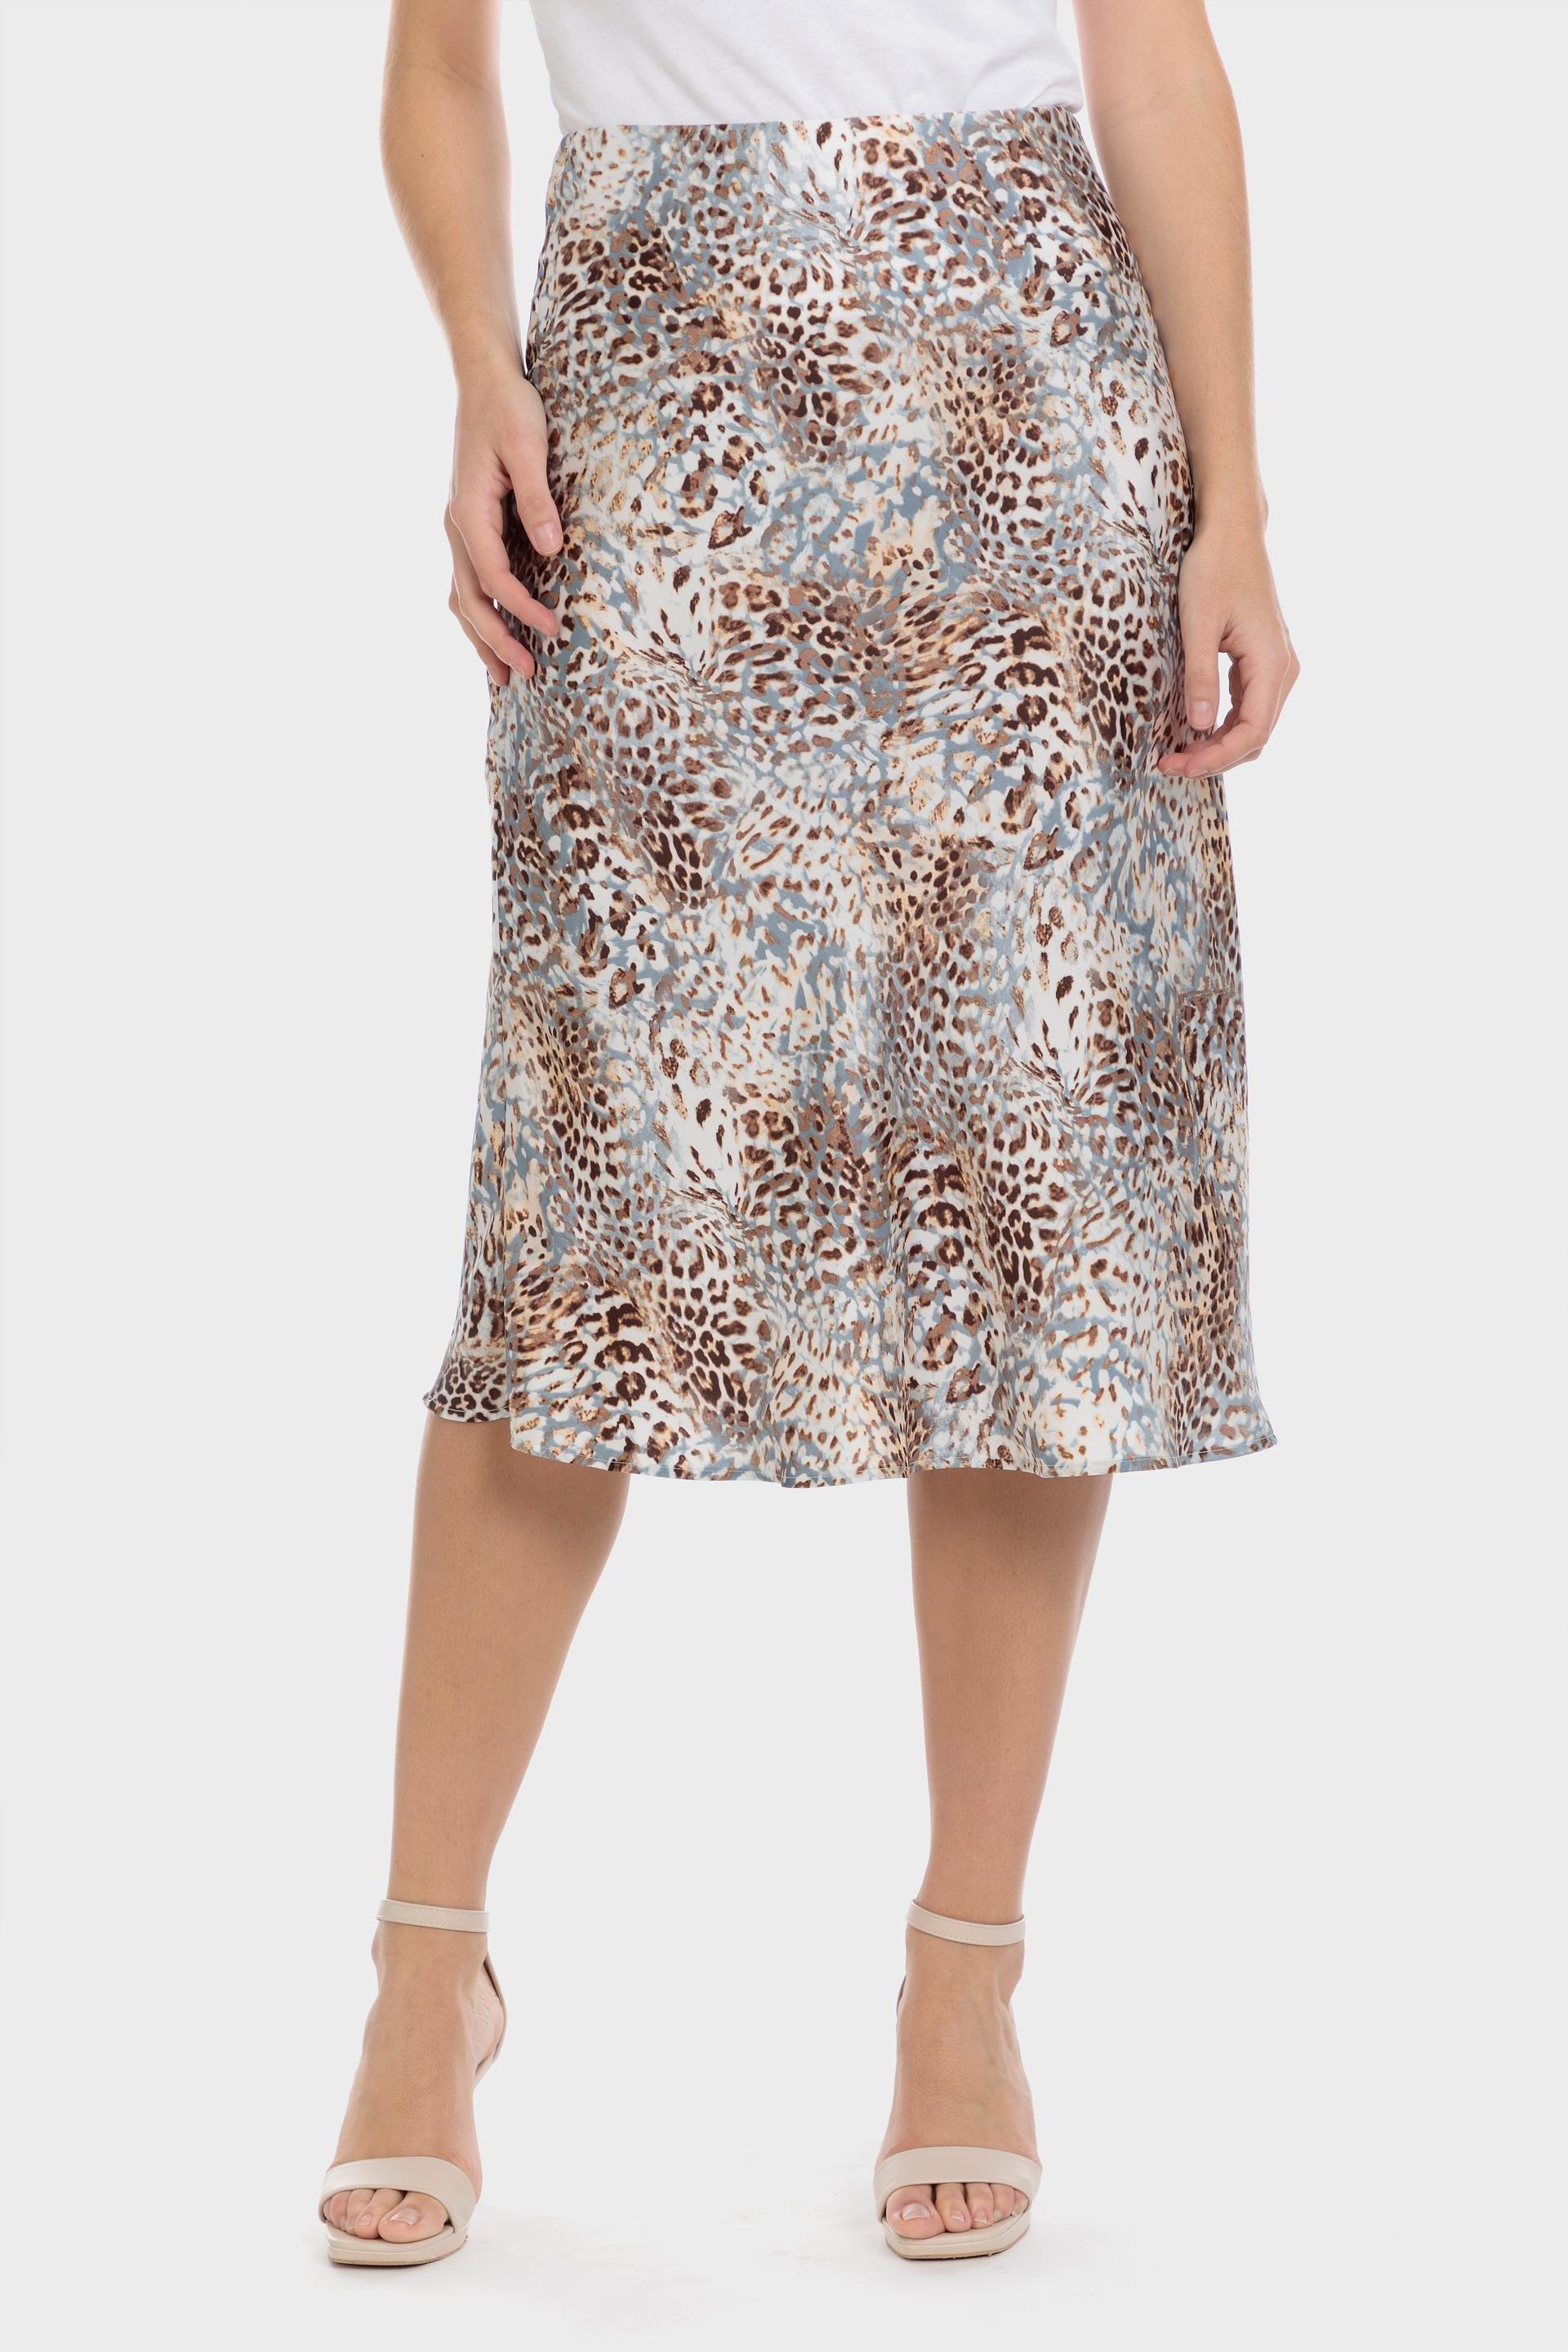 Punt Roma - Multicolour Animal Print Skirt